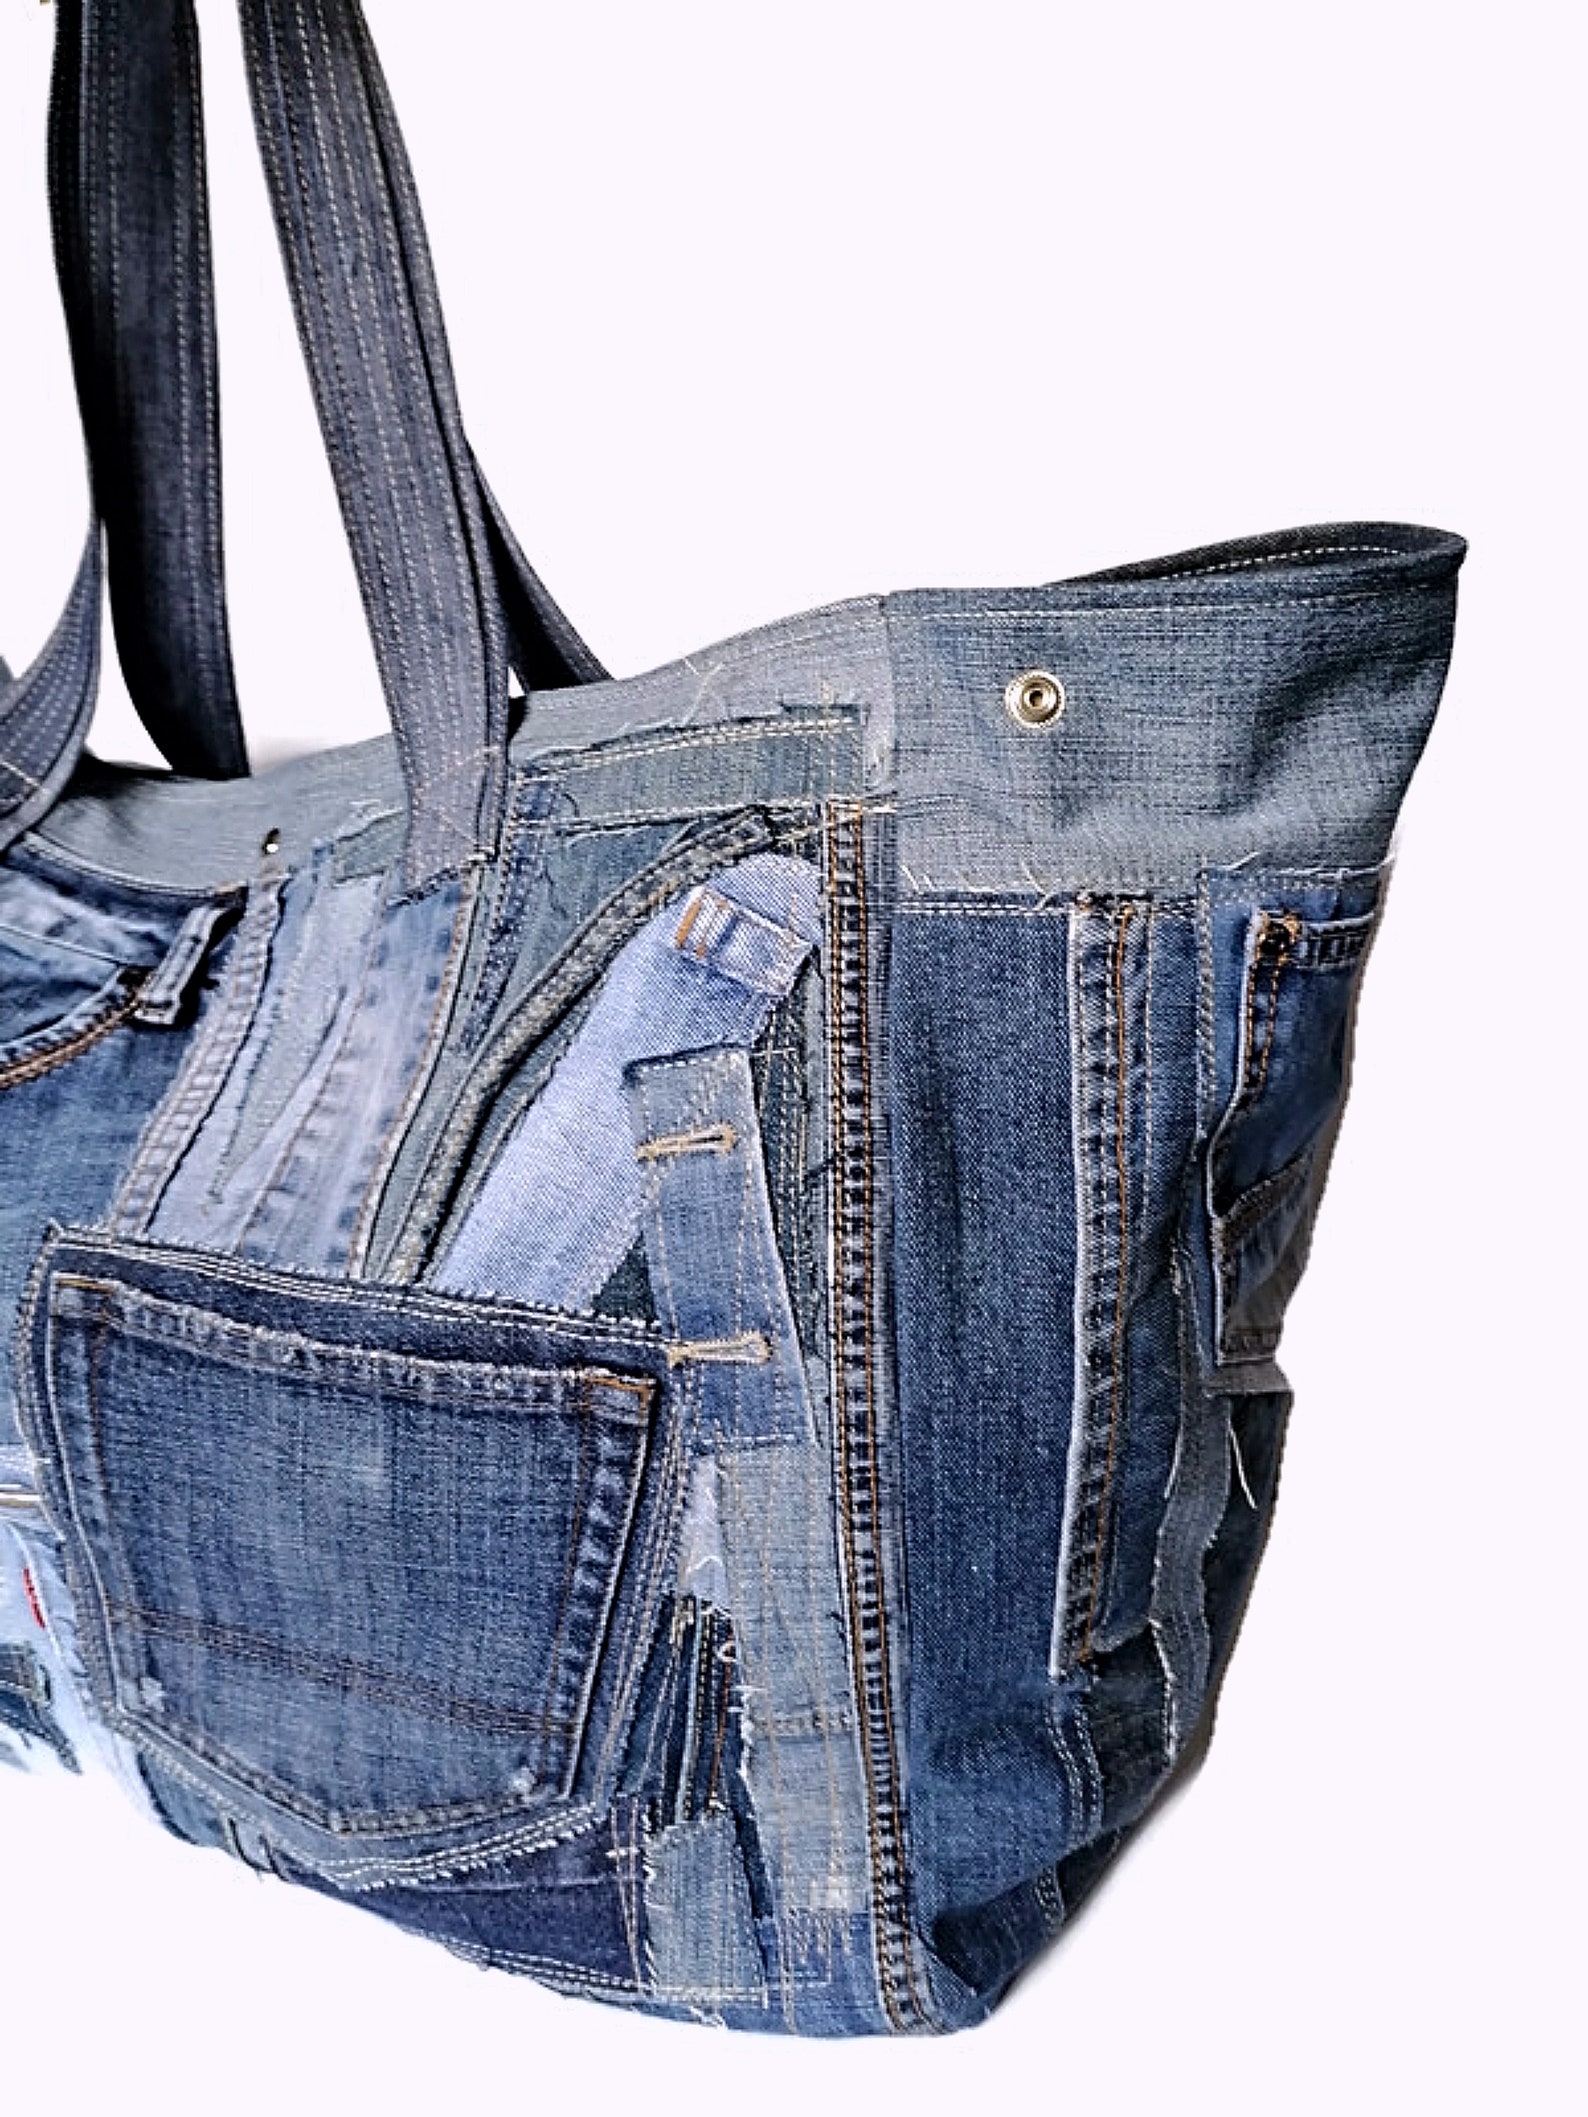 Oversize Jeans Bag Extra Large Bag Jeans Shopping Jeans Bag | Etsy